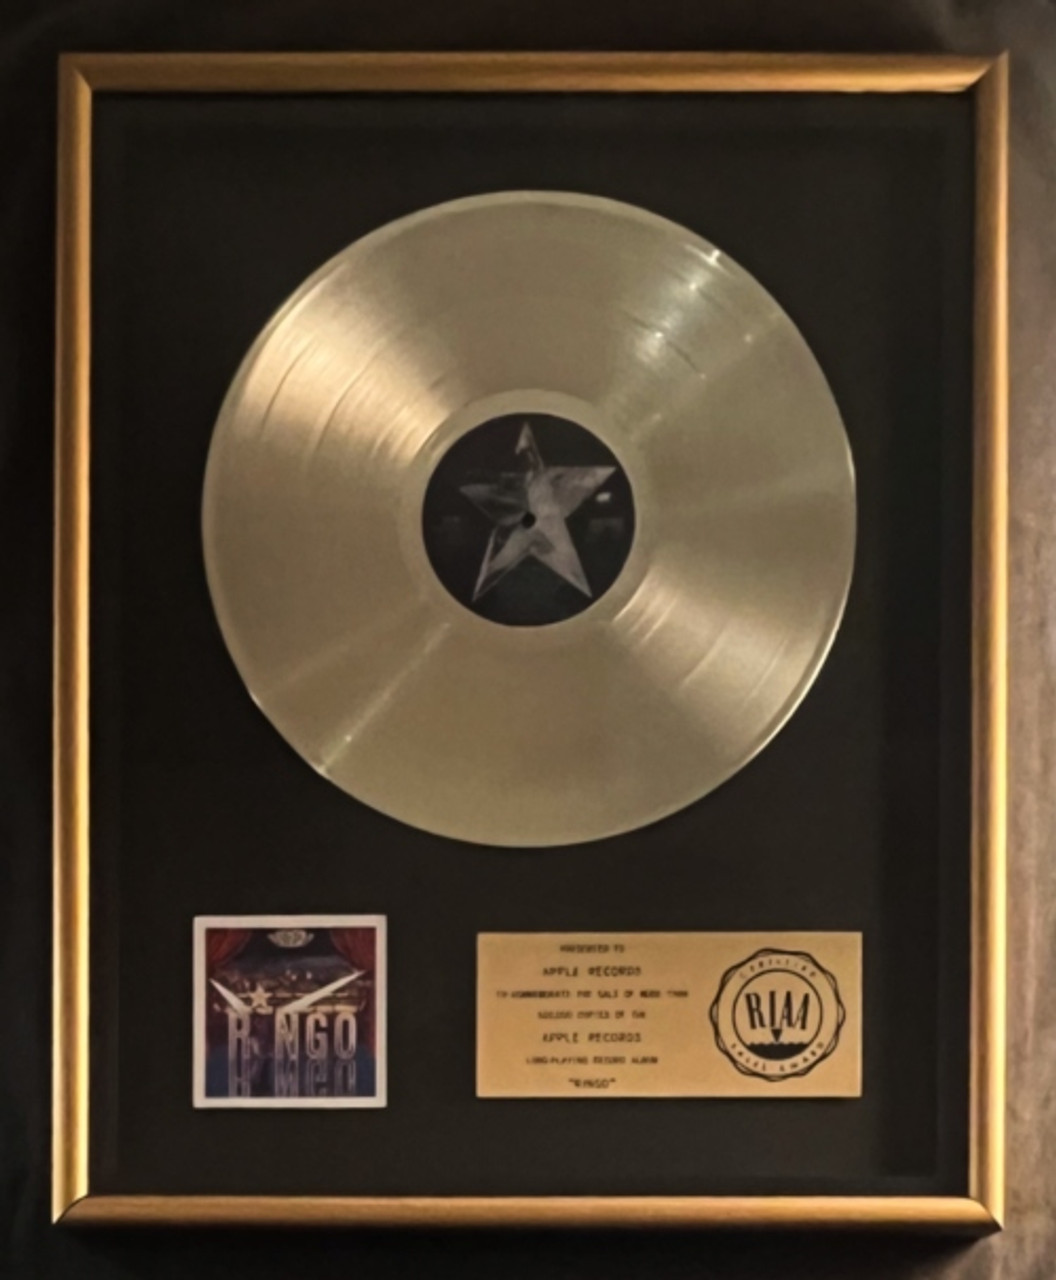 Ringo Starr Ringo (Self Titled) LP Gold RIAA Record Award Apple Records
